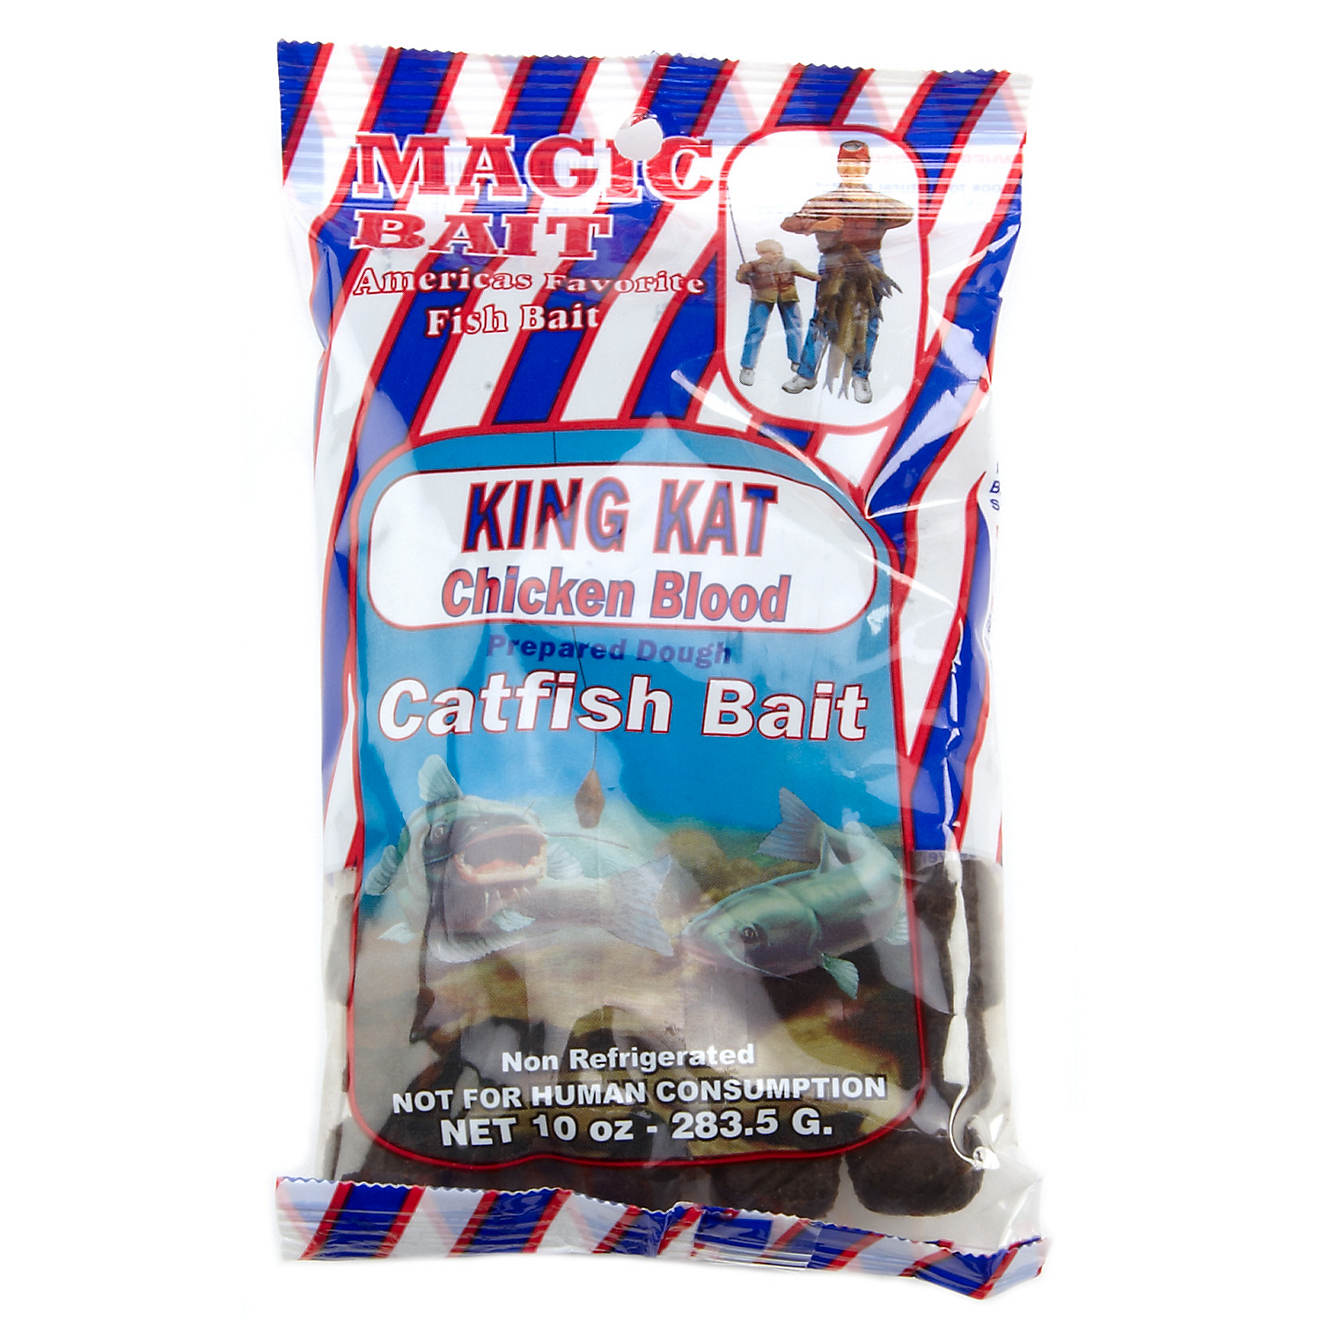 Magic Bait King Kat Chicken Blood Catfish Bait | Academy